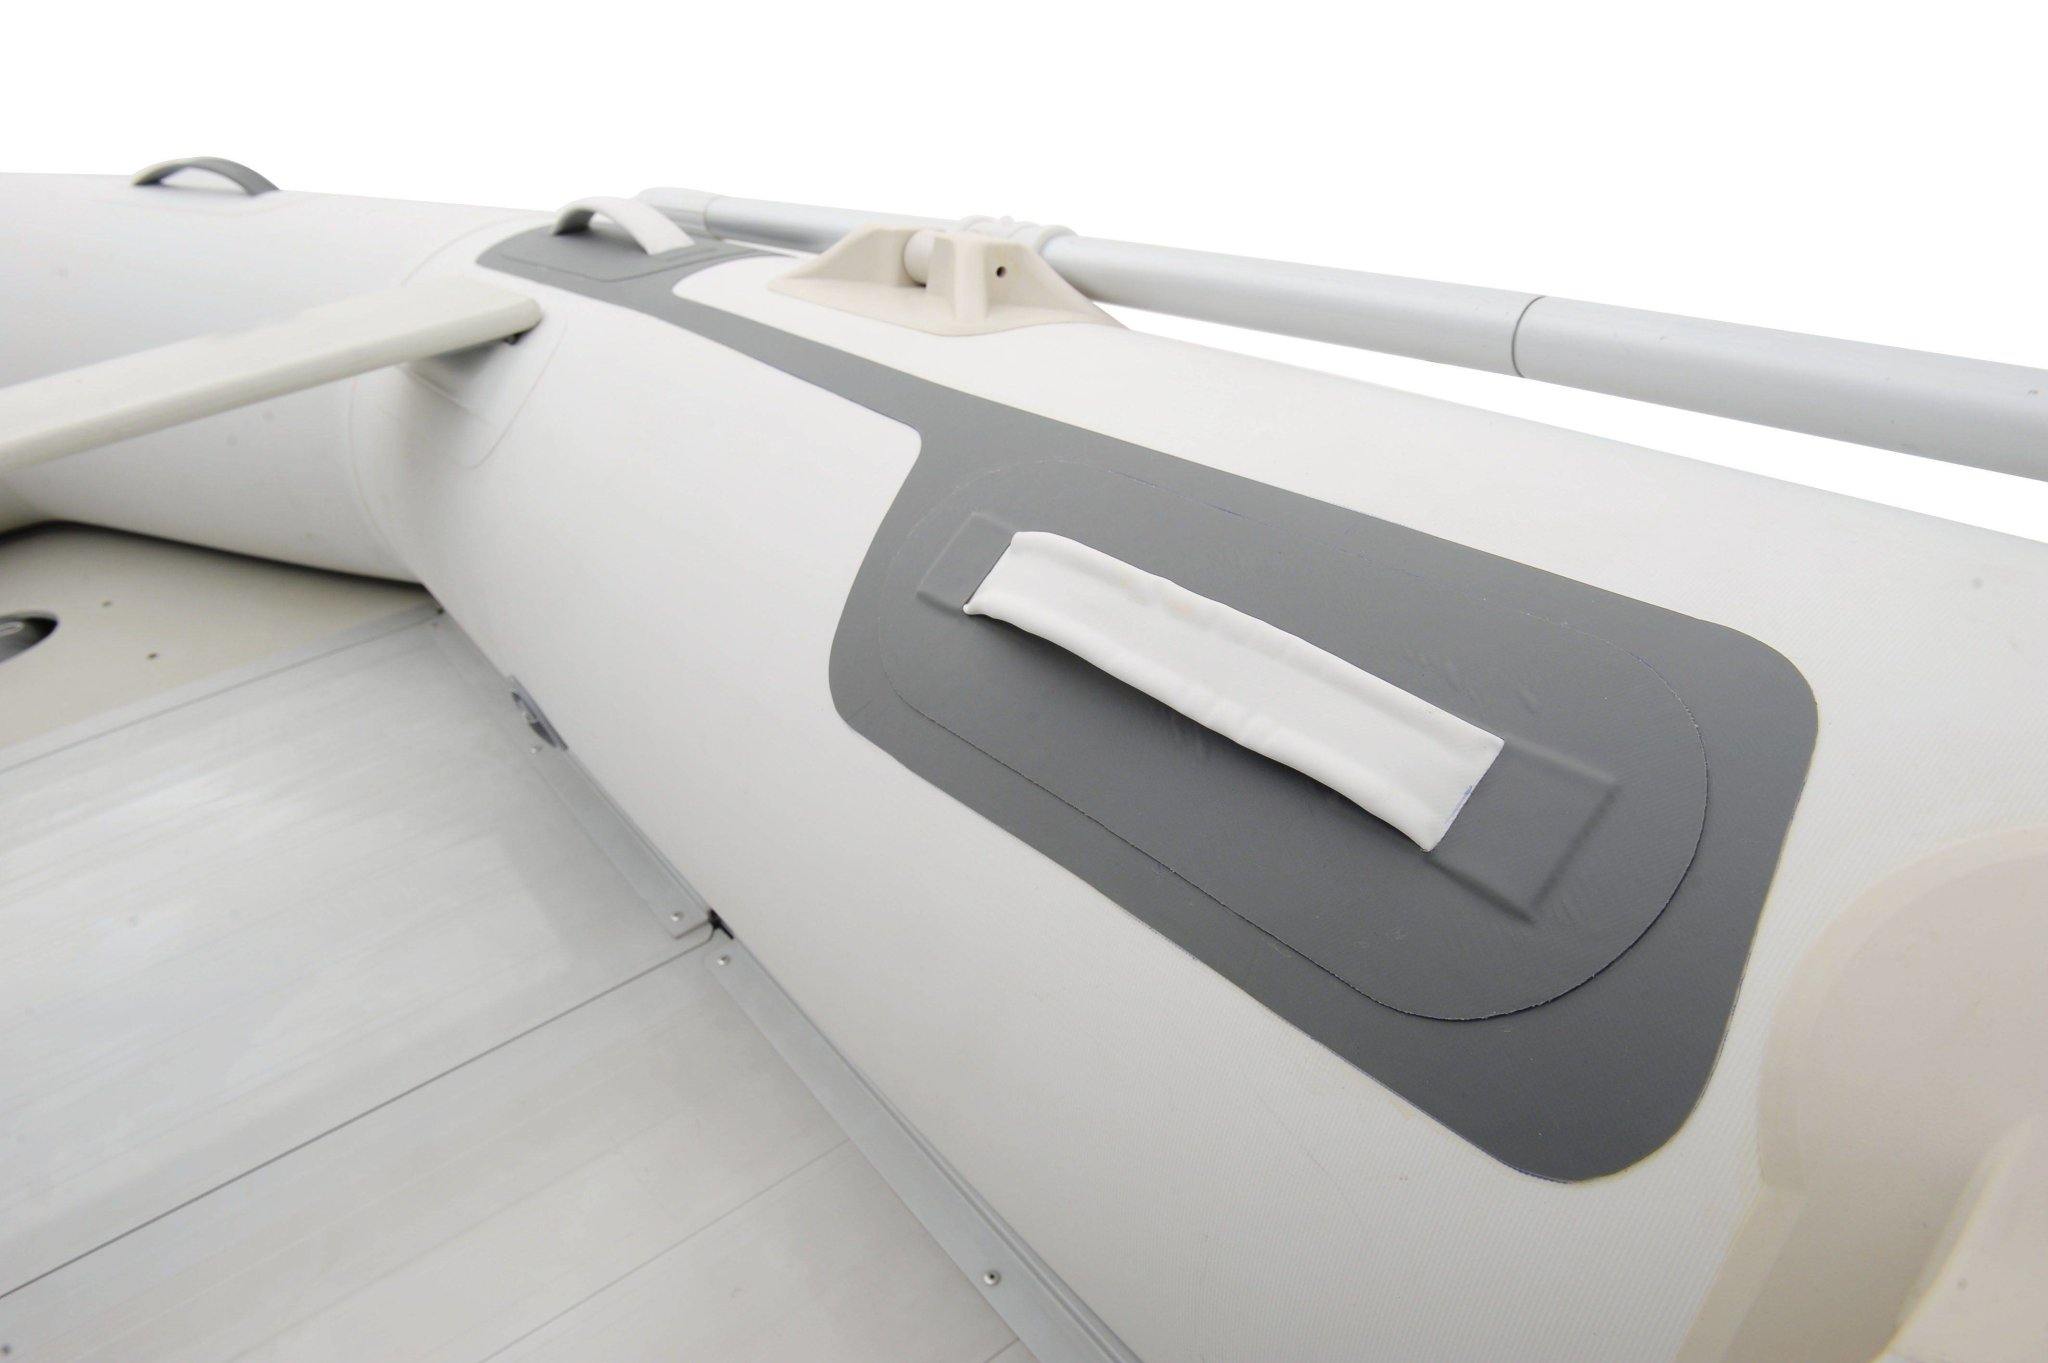 Aqua Marina Deluxe Inflatable Speed Boat - DTI Direct USA